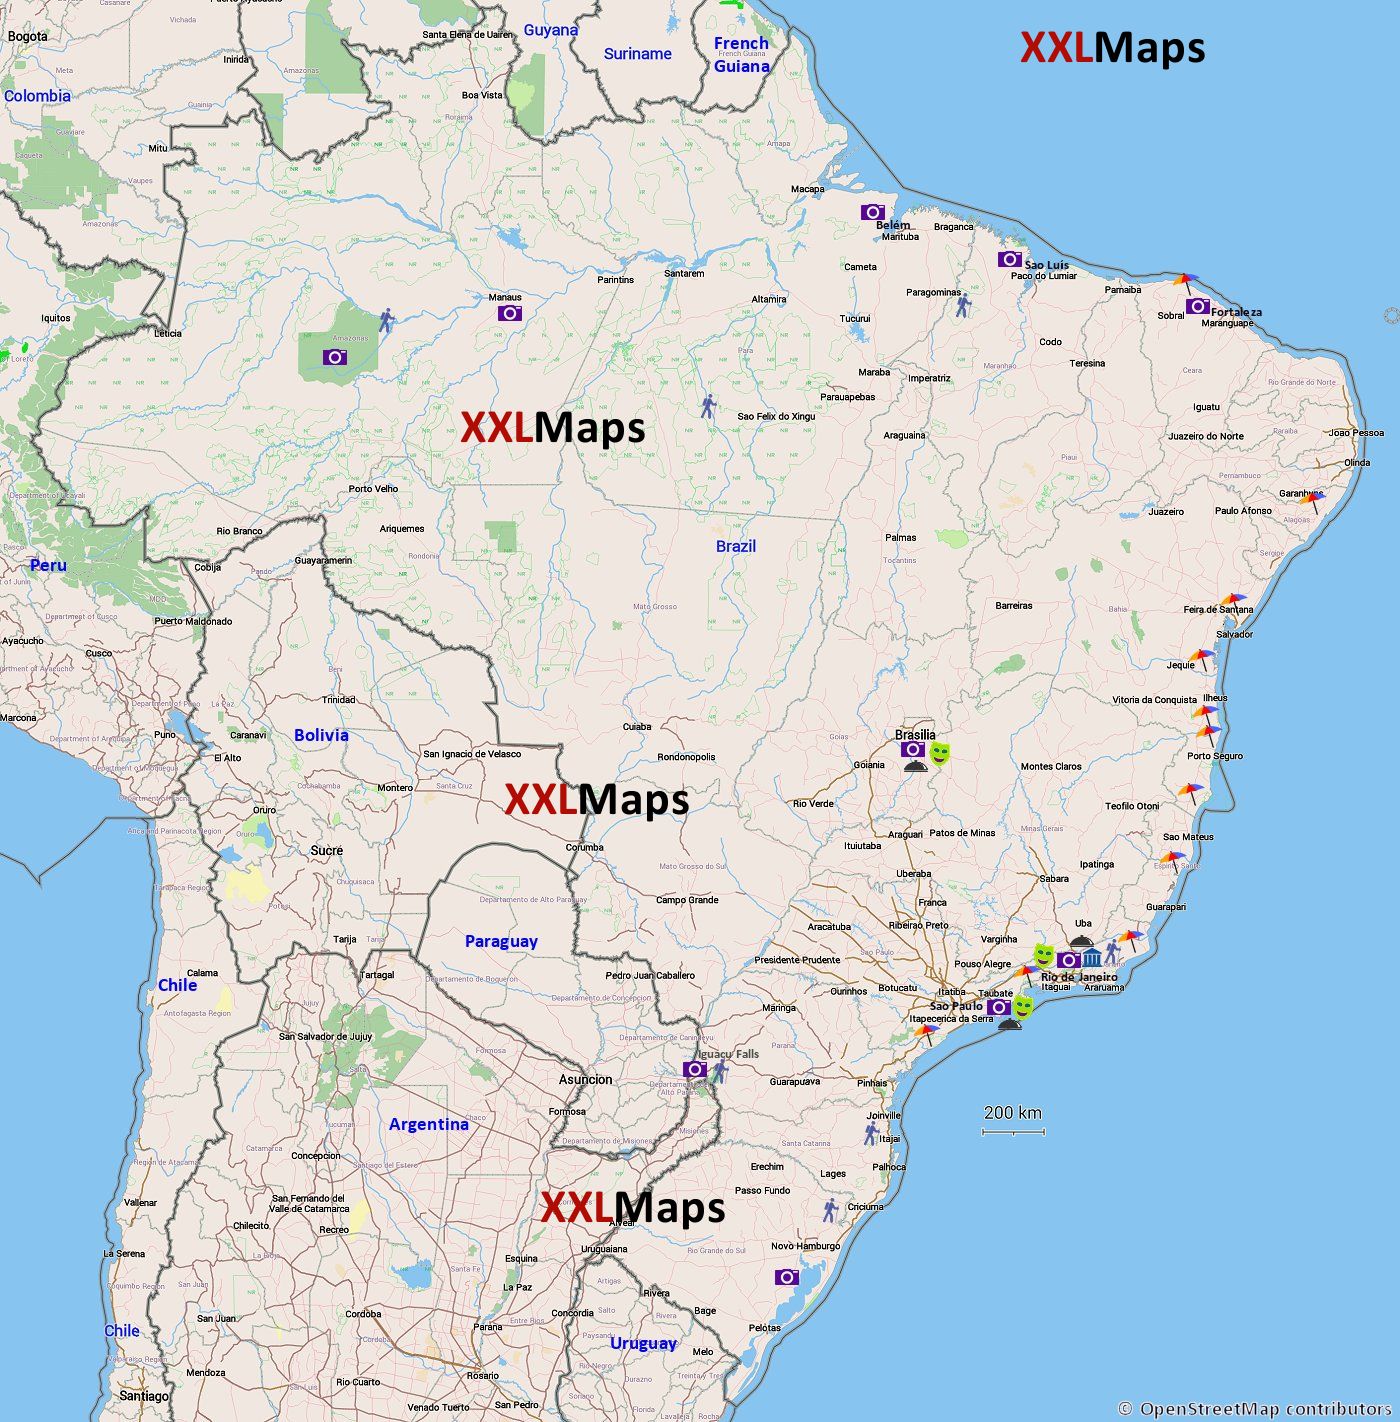 Turist kart over Brasil